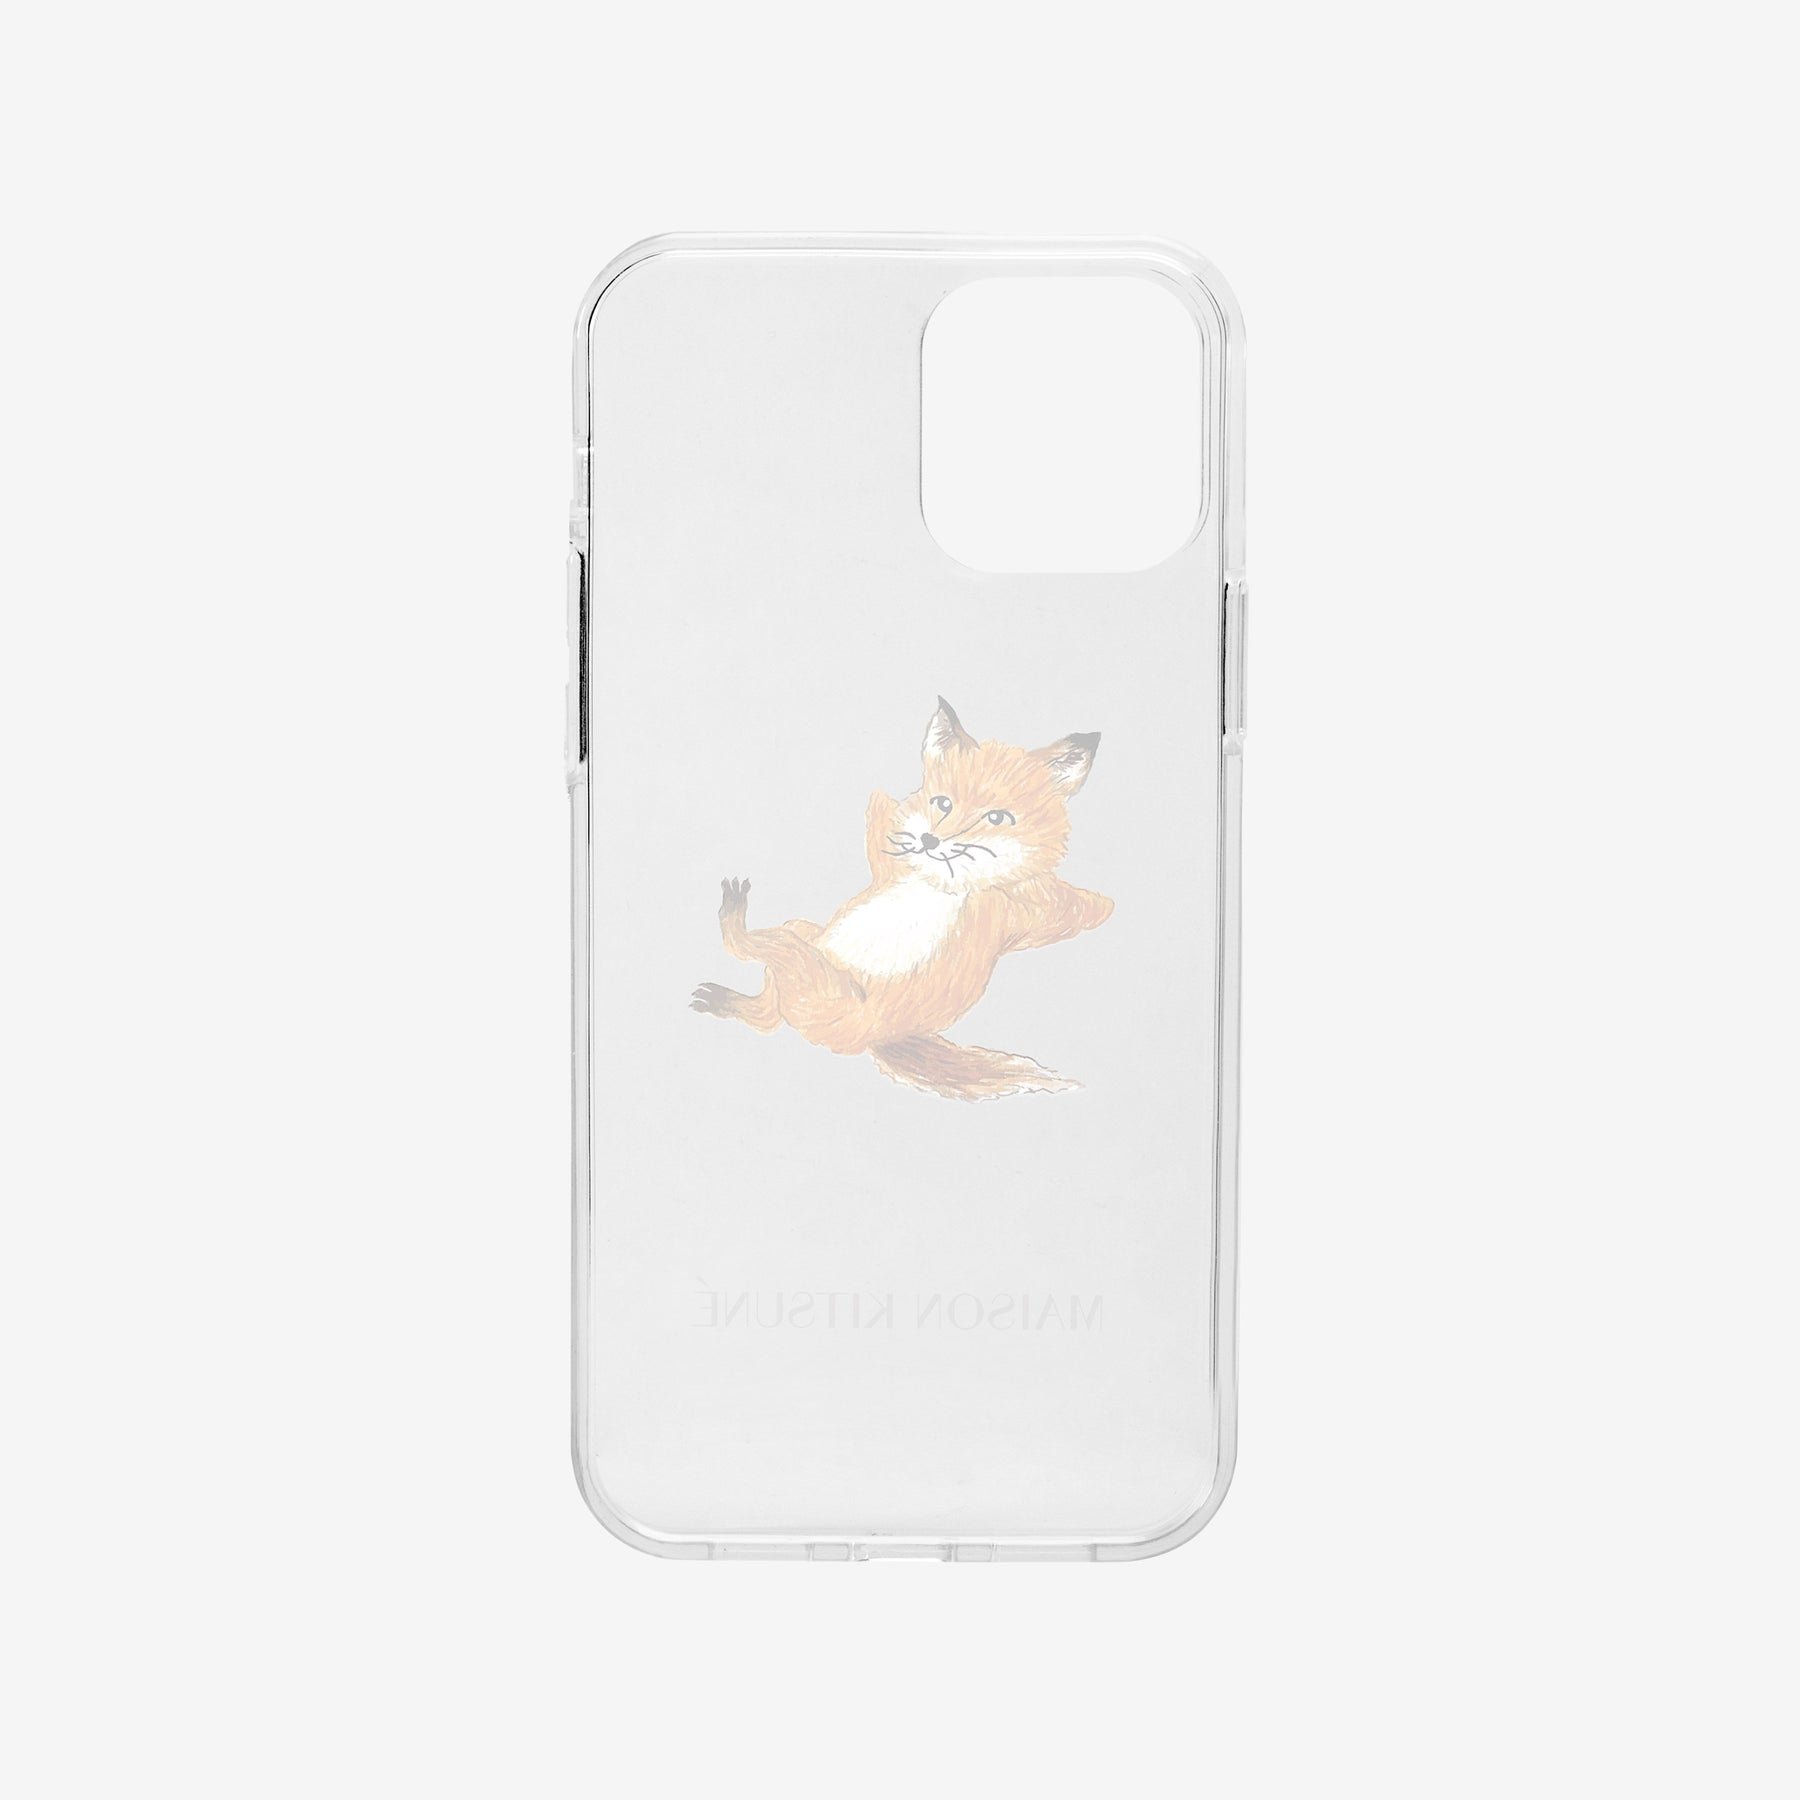 Chillax Fox Case (iPhone 12 Mini)